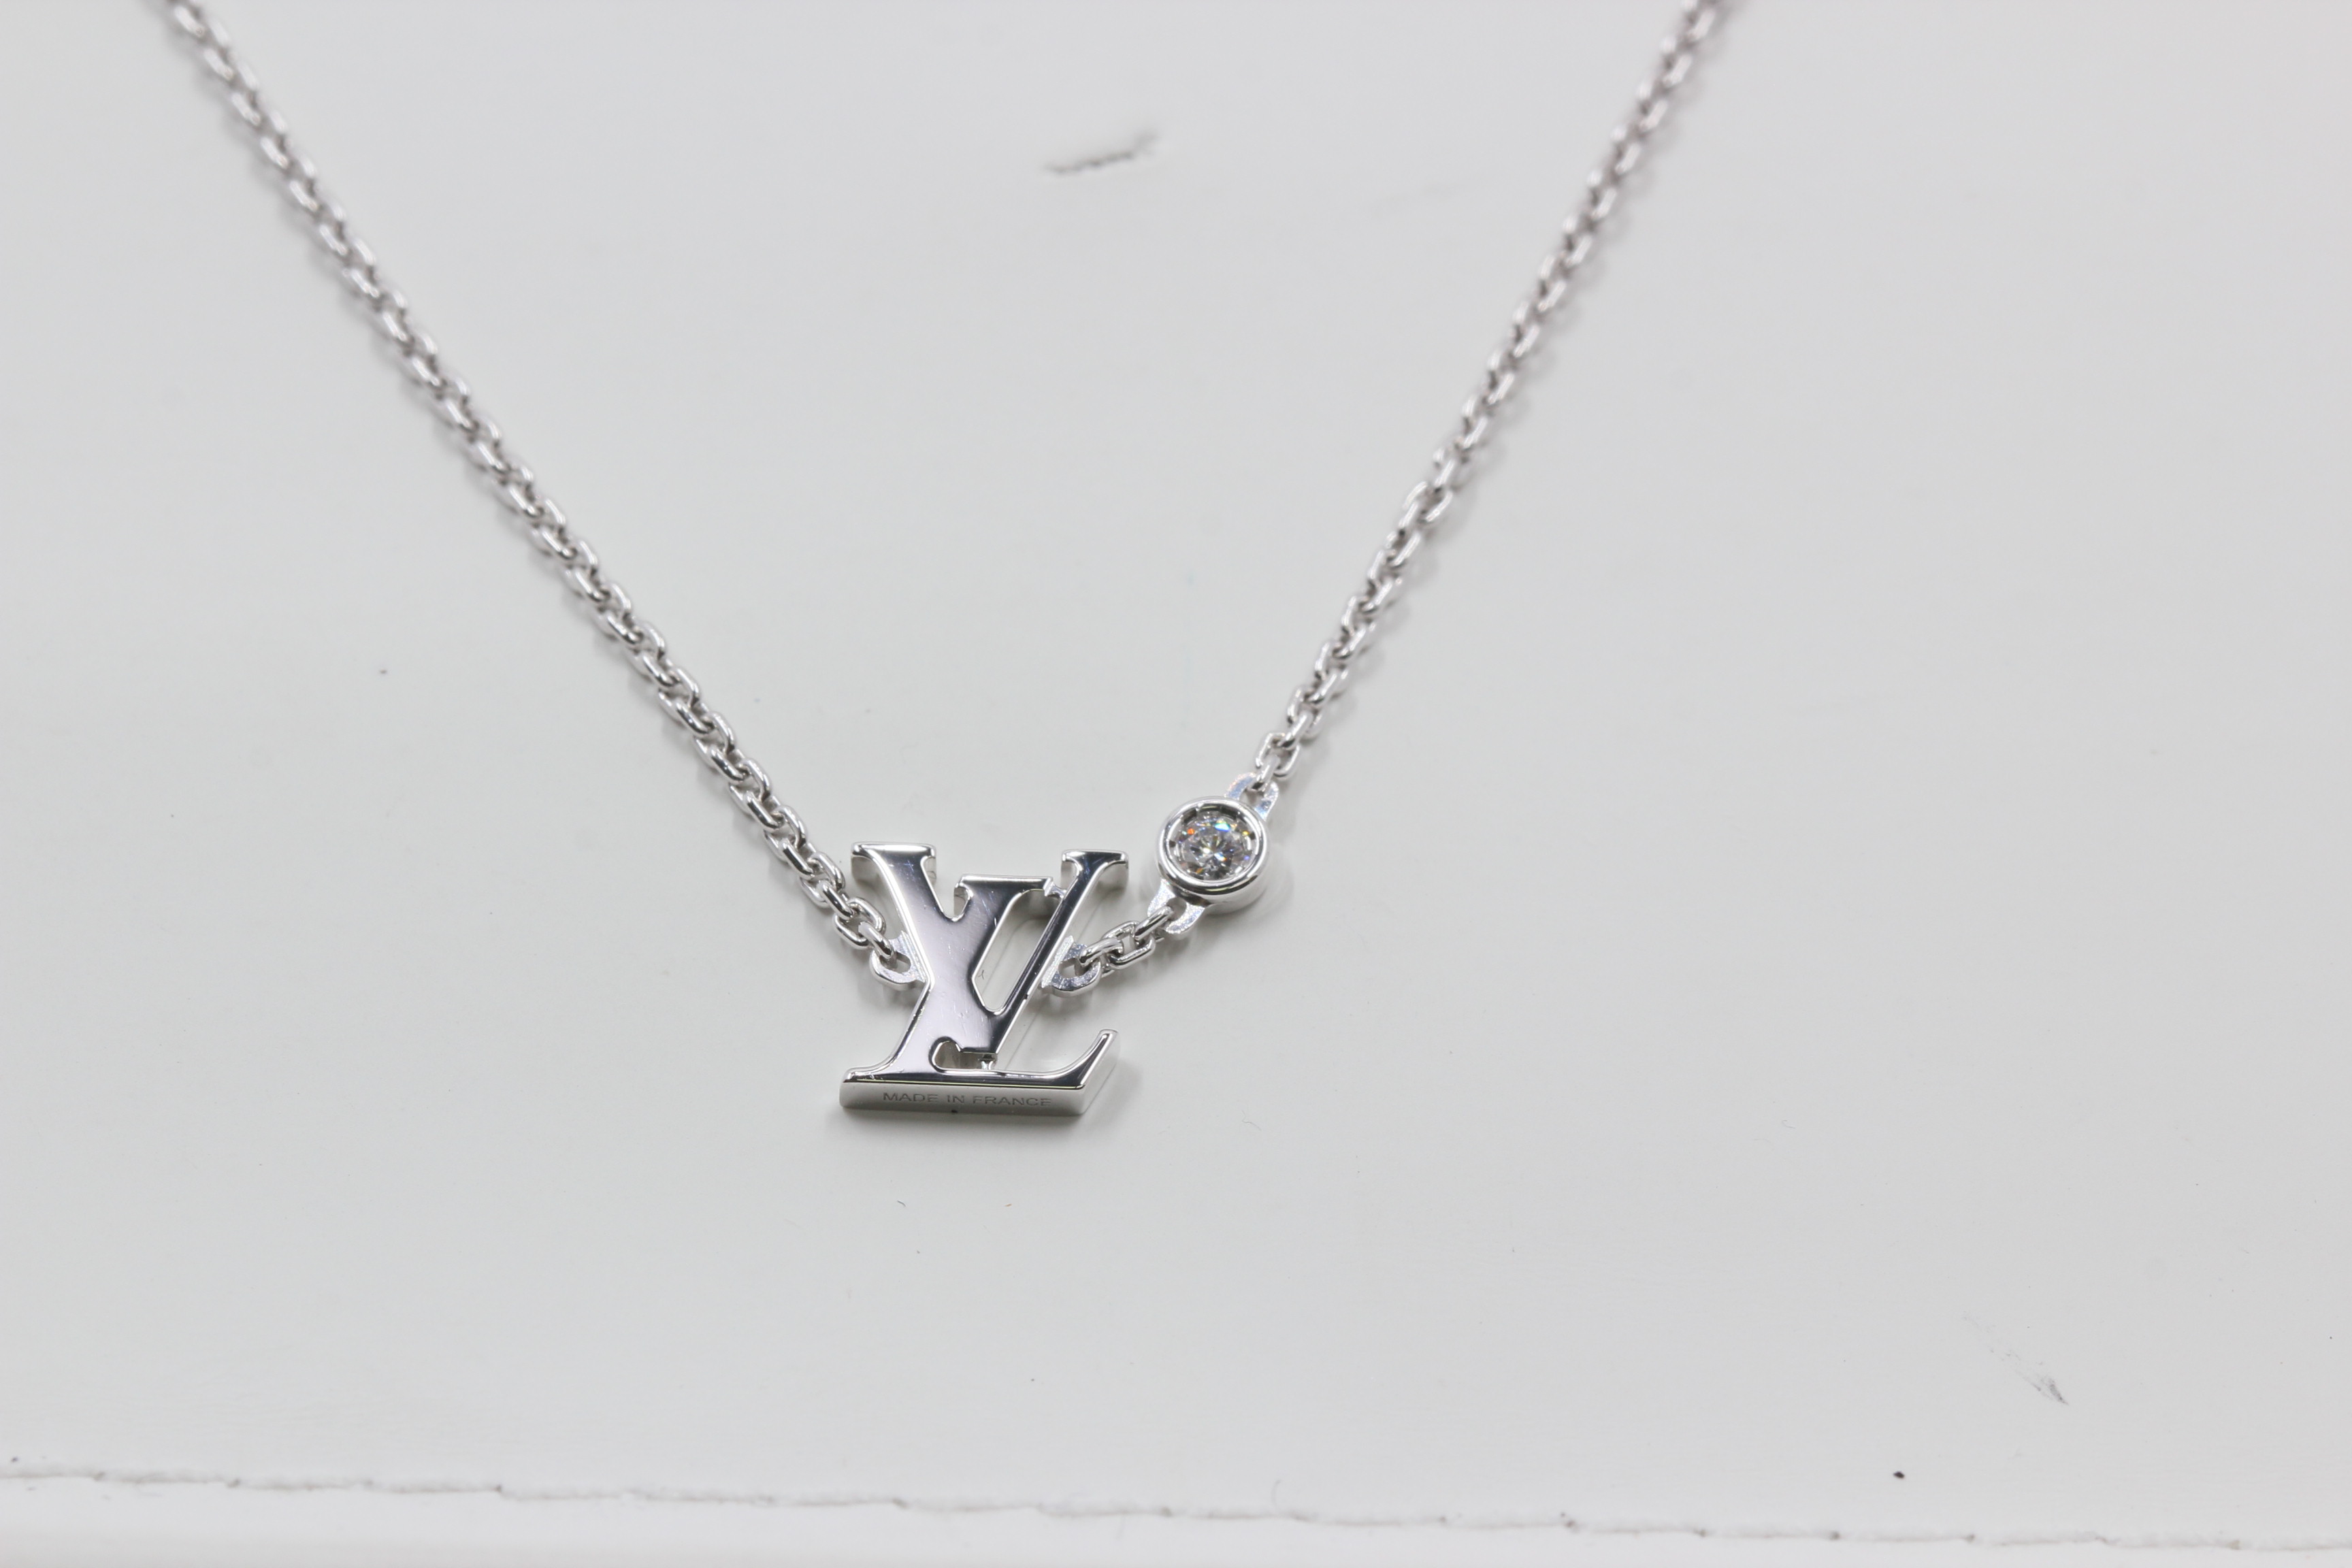 Louis Vuitton Idylle Blossom Pendant Necklace w/Diamond in 18K White Gold-16&quot; | eBay